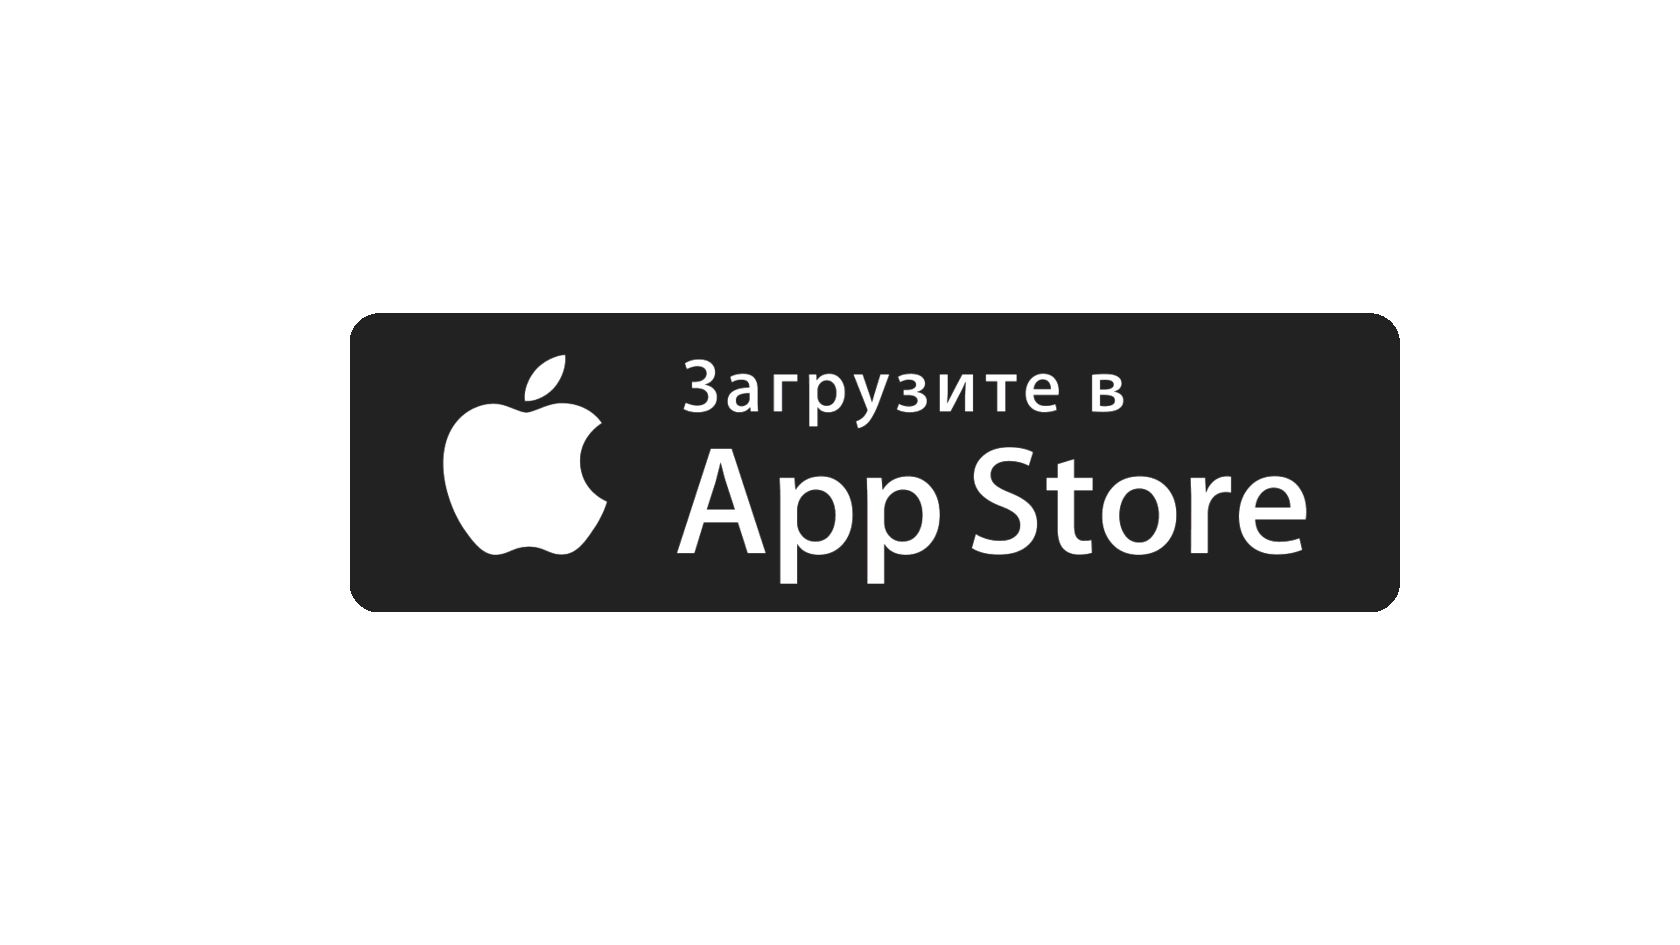 App store videos. Иконка app Store. Загрузите в app Store. Значок доступно в app Store. Эпл сторе и гугл плей.